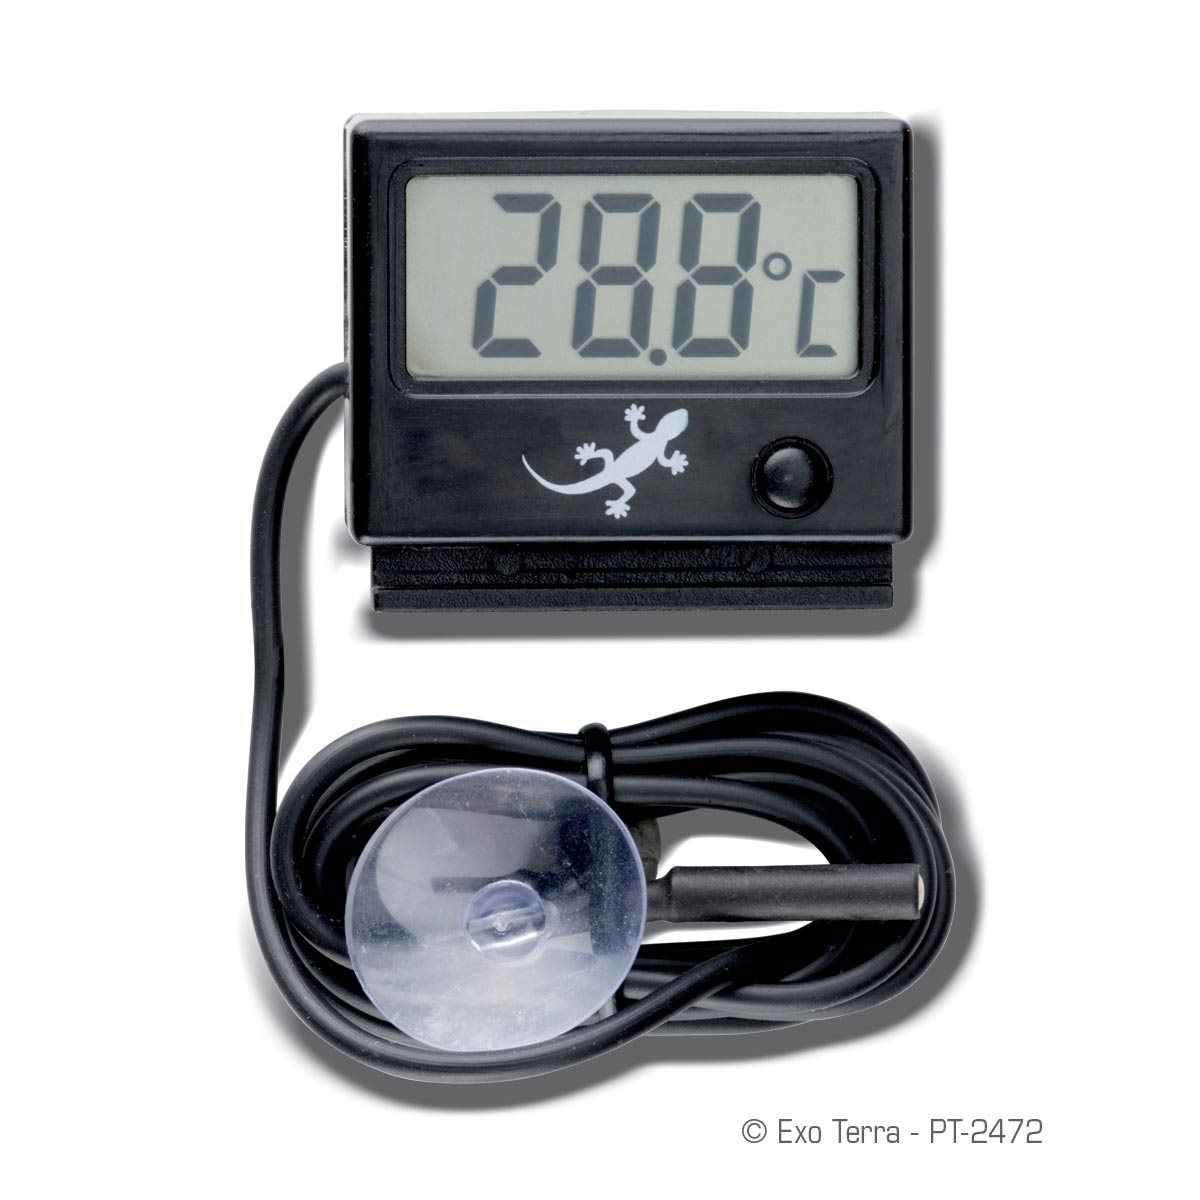 Exo Terra Digital Thermometer 